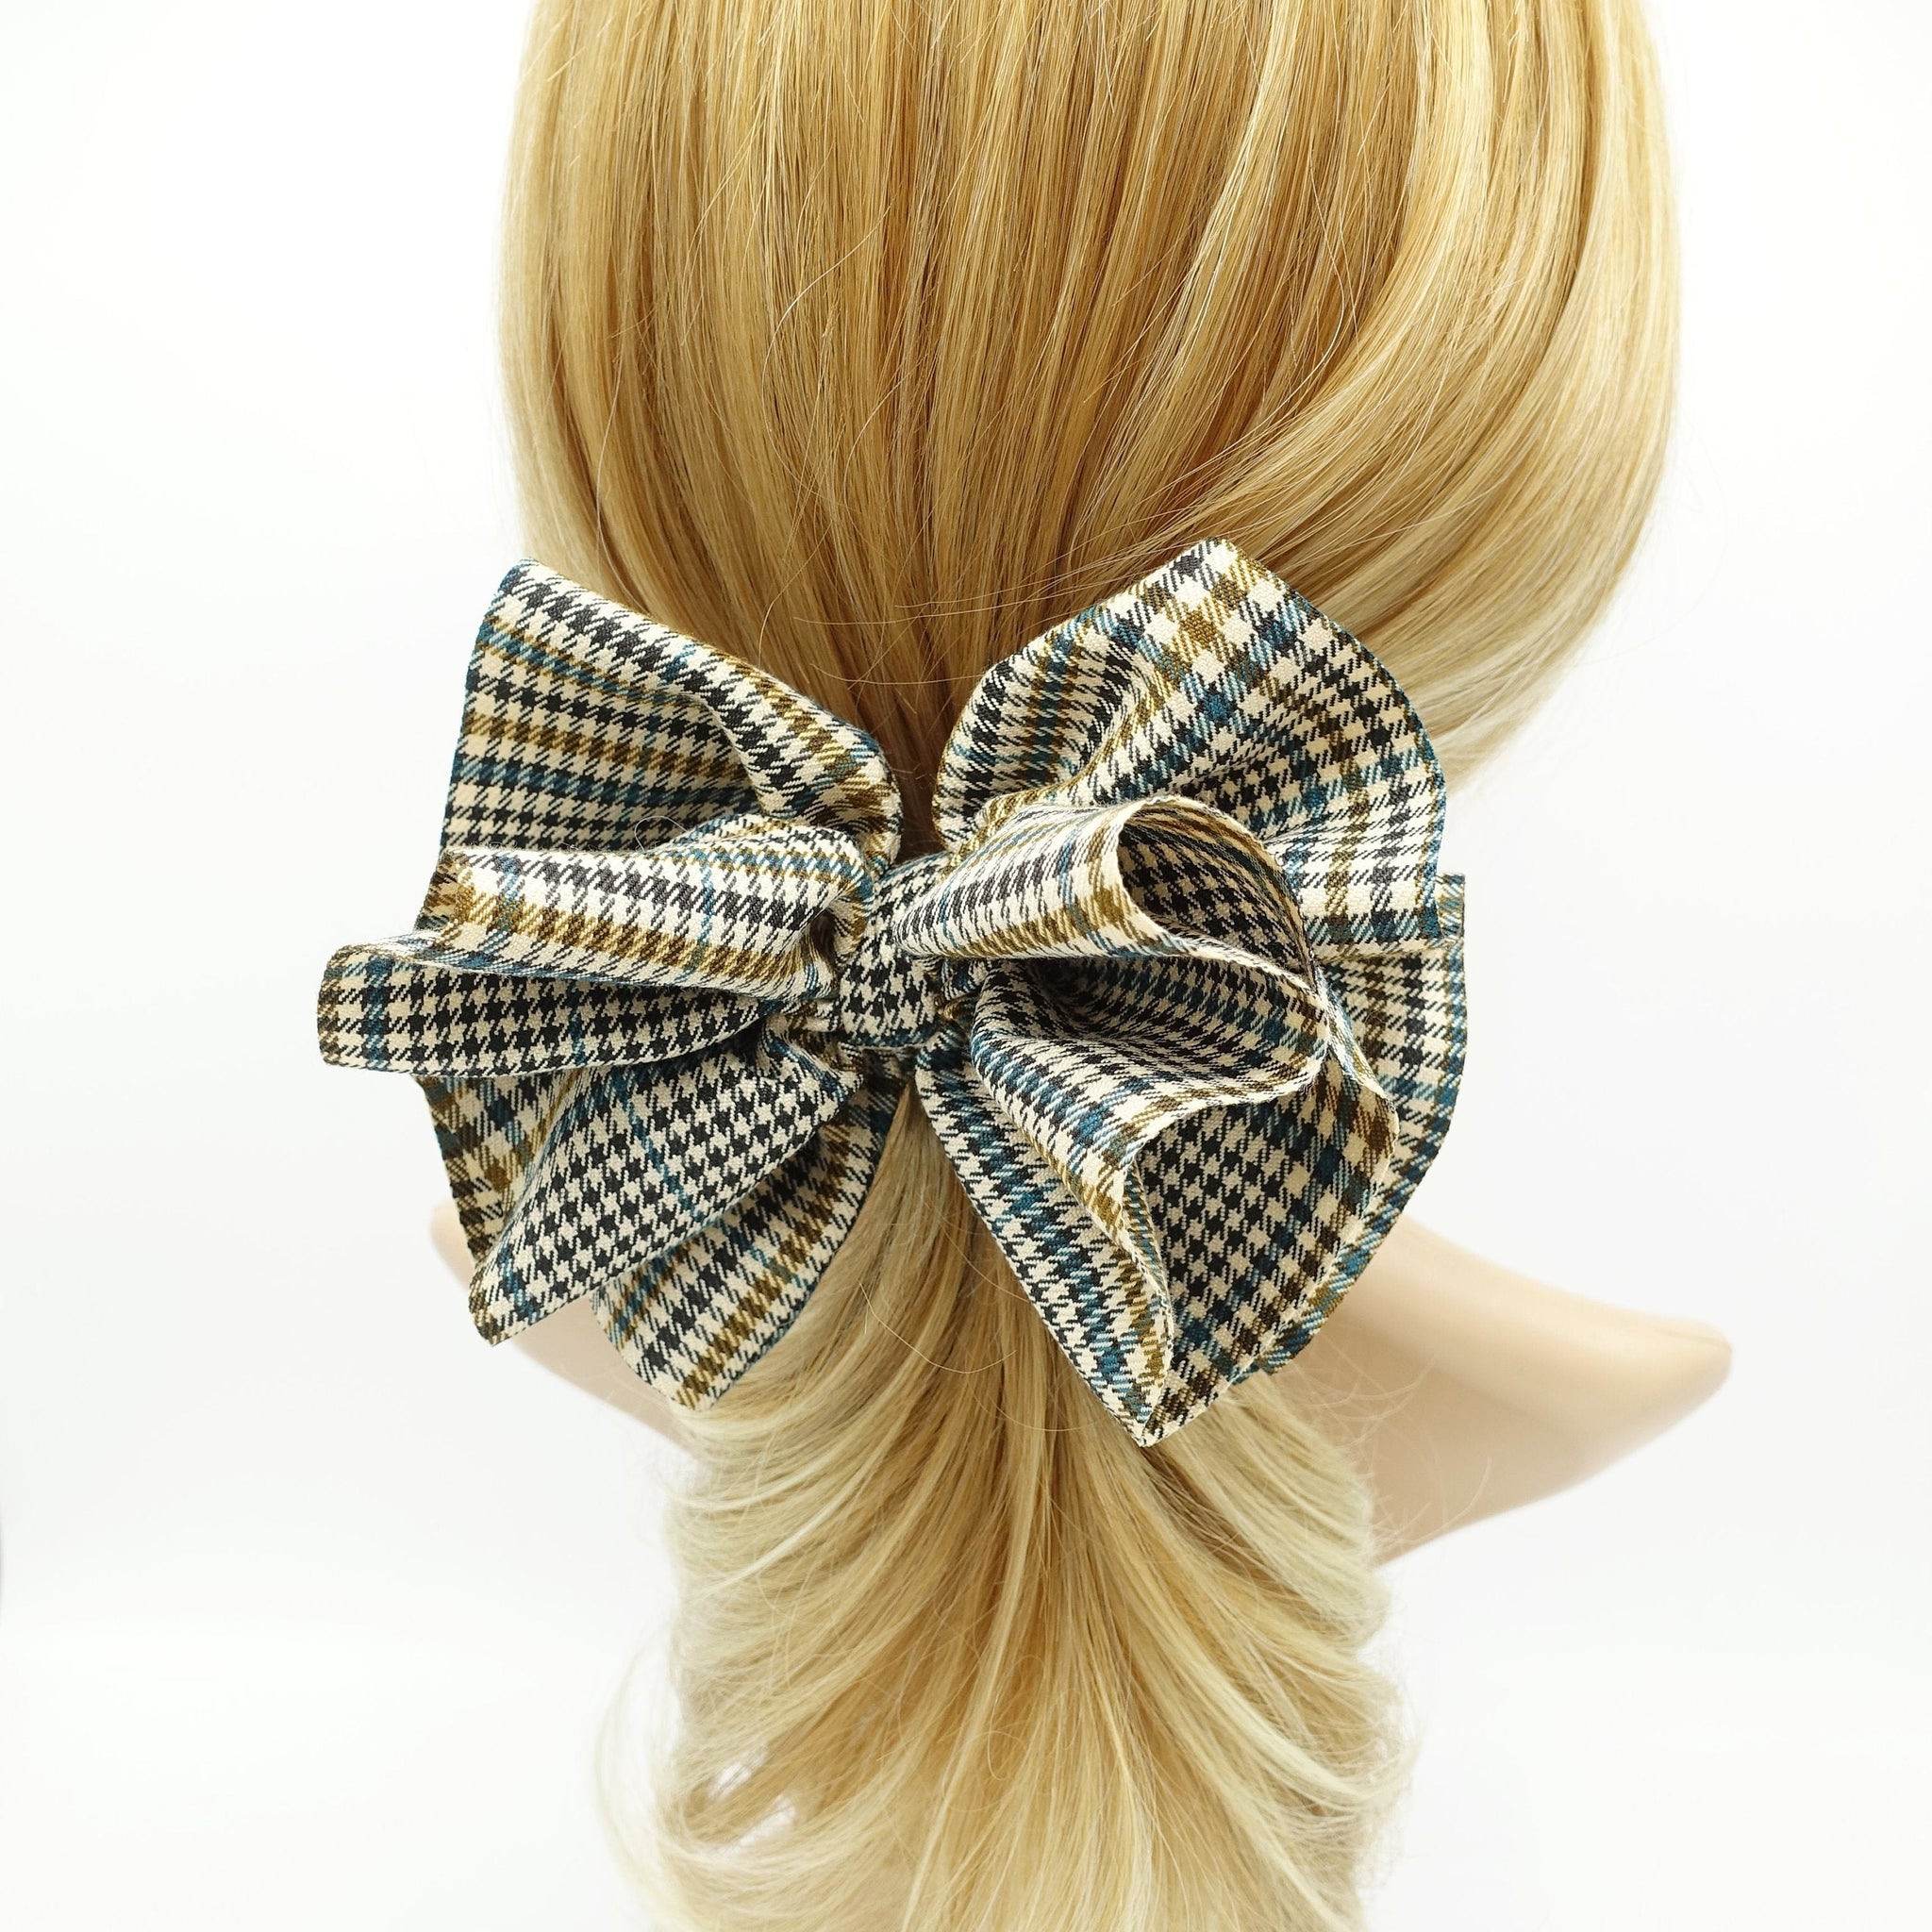 veryshine.com Barrette (Bow) Green plaid check hair bow volume pleats barrette hair accessory for women